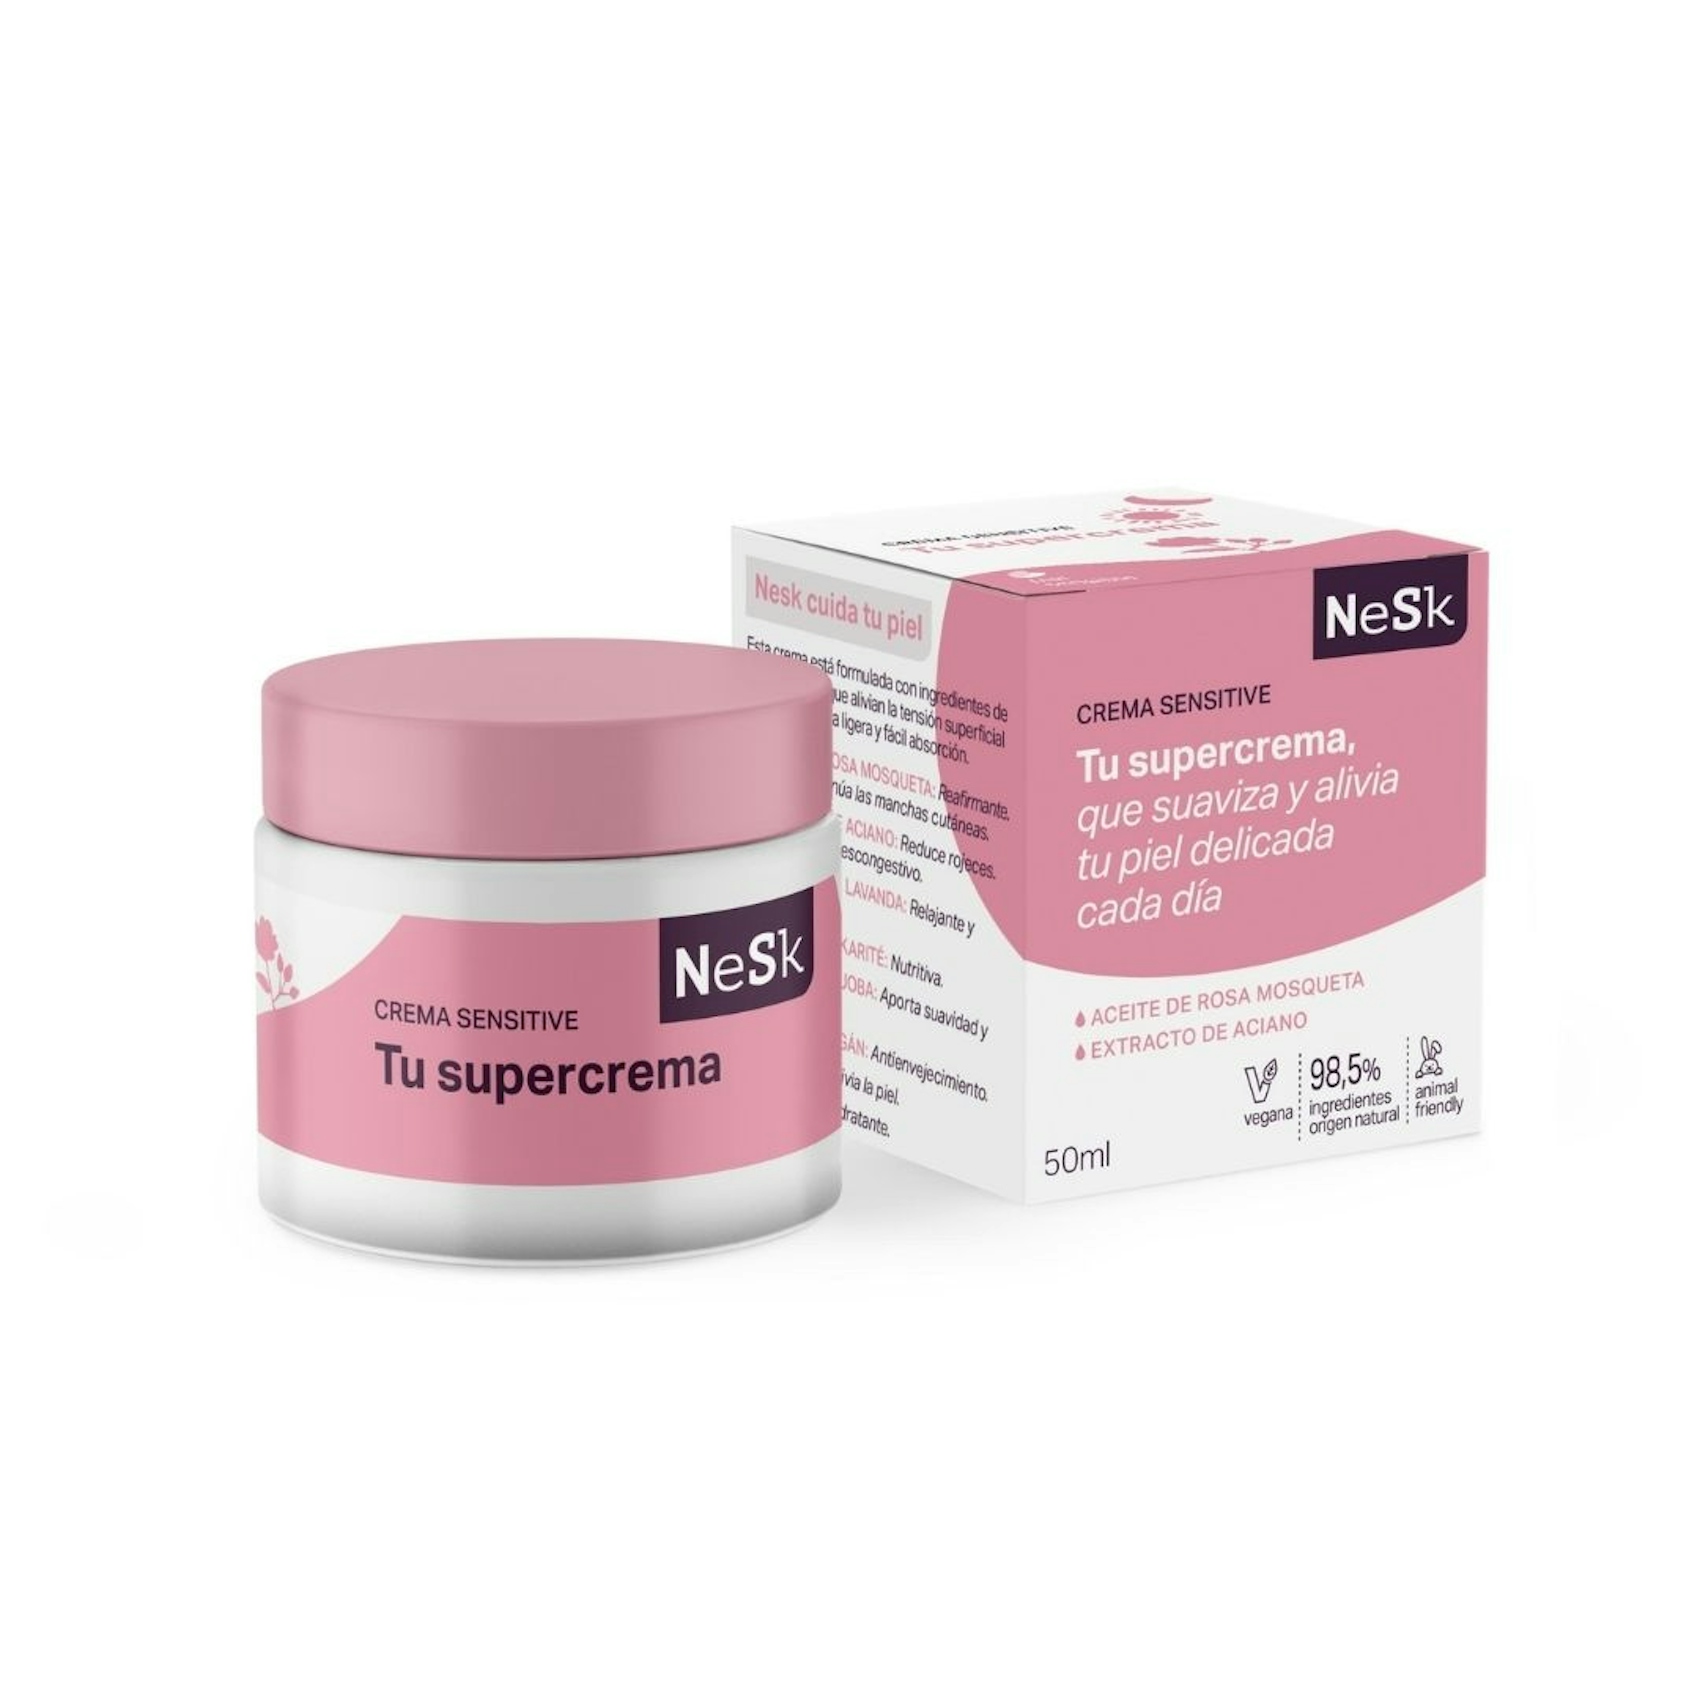 Crema para piel sensible "Tu Supercrema" de NeSk 50 ml